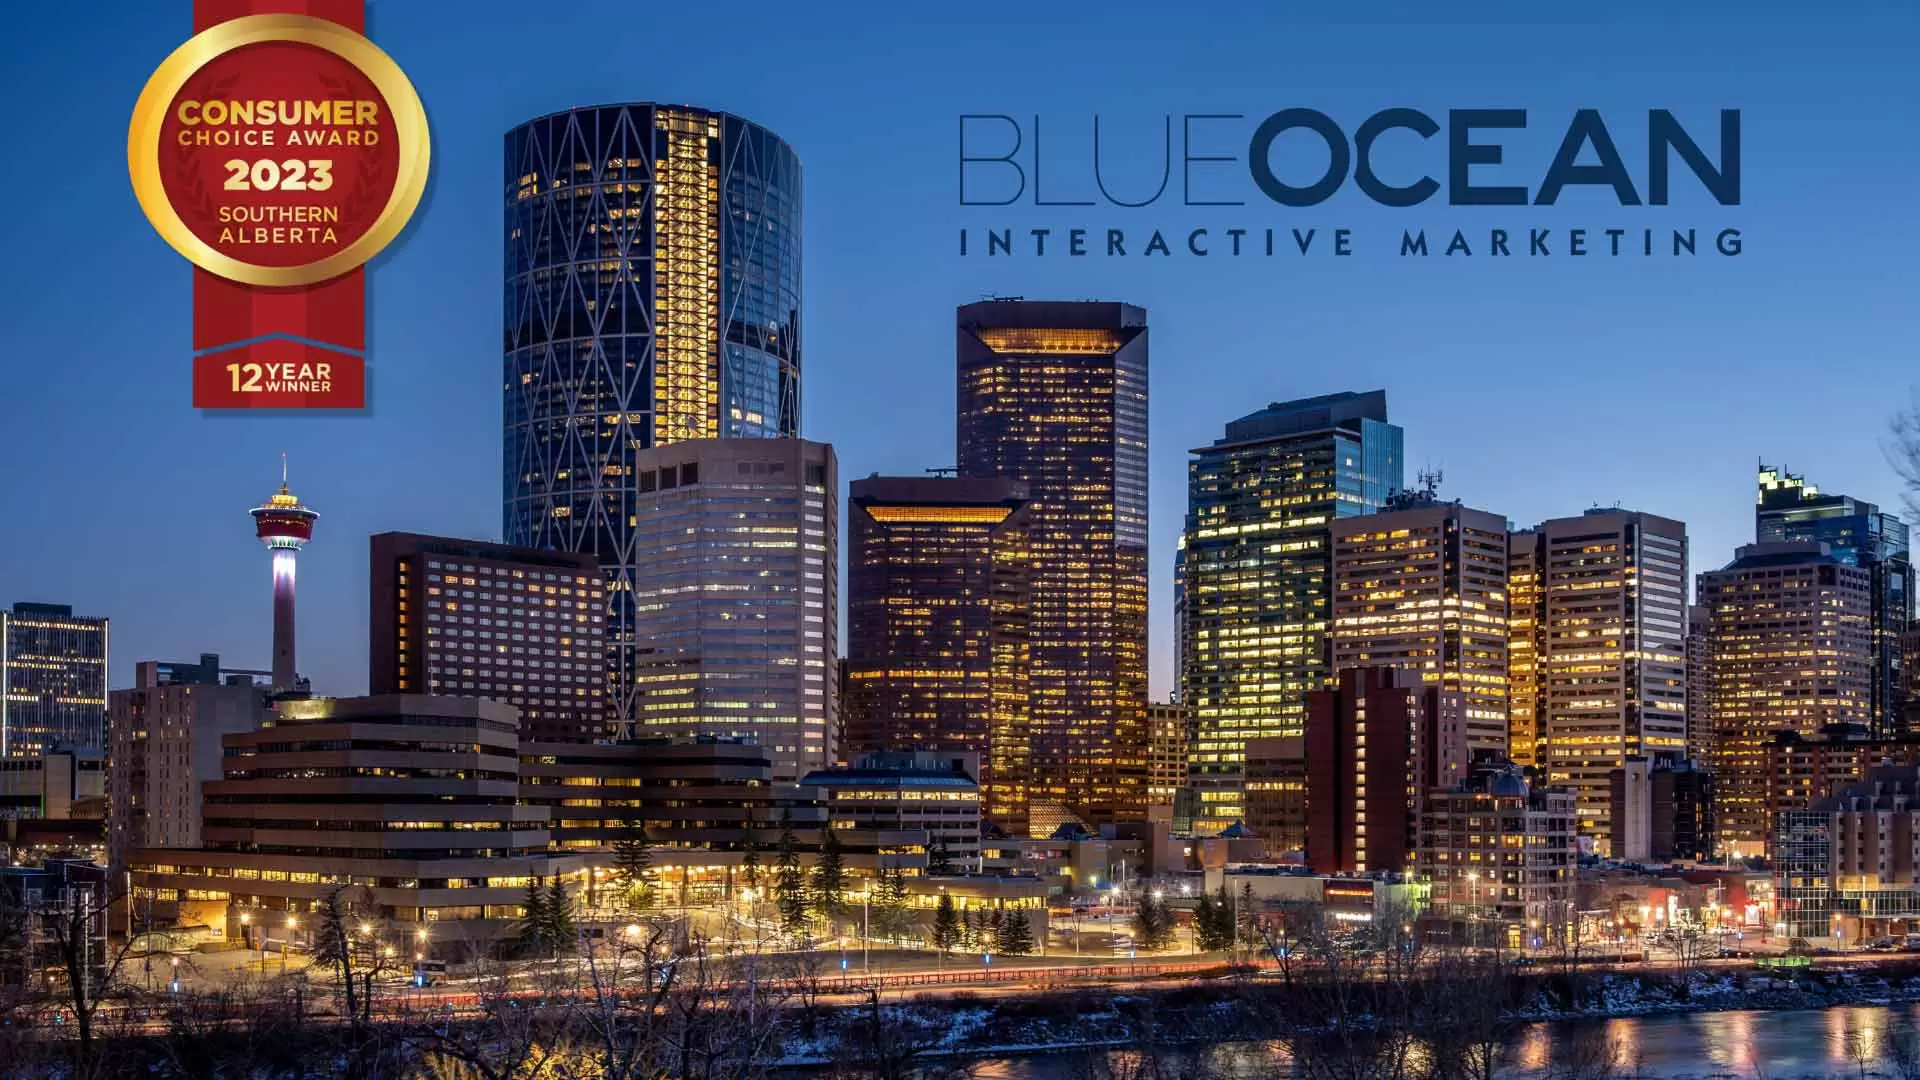 Blue-Ocean-Interactive-Marketing-Consumer-Choice-Award-Winner-Southern-Alberta-Web-Design-2023